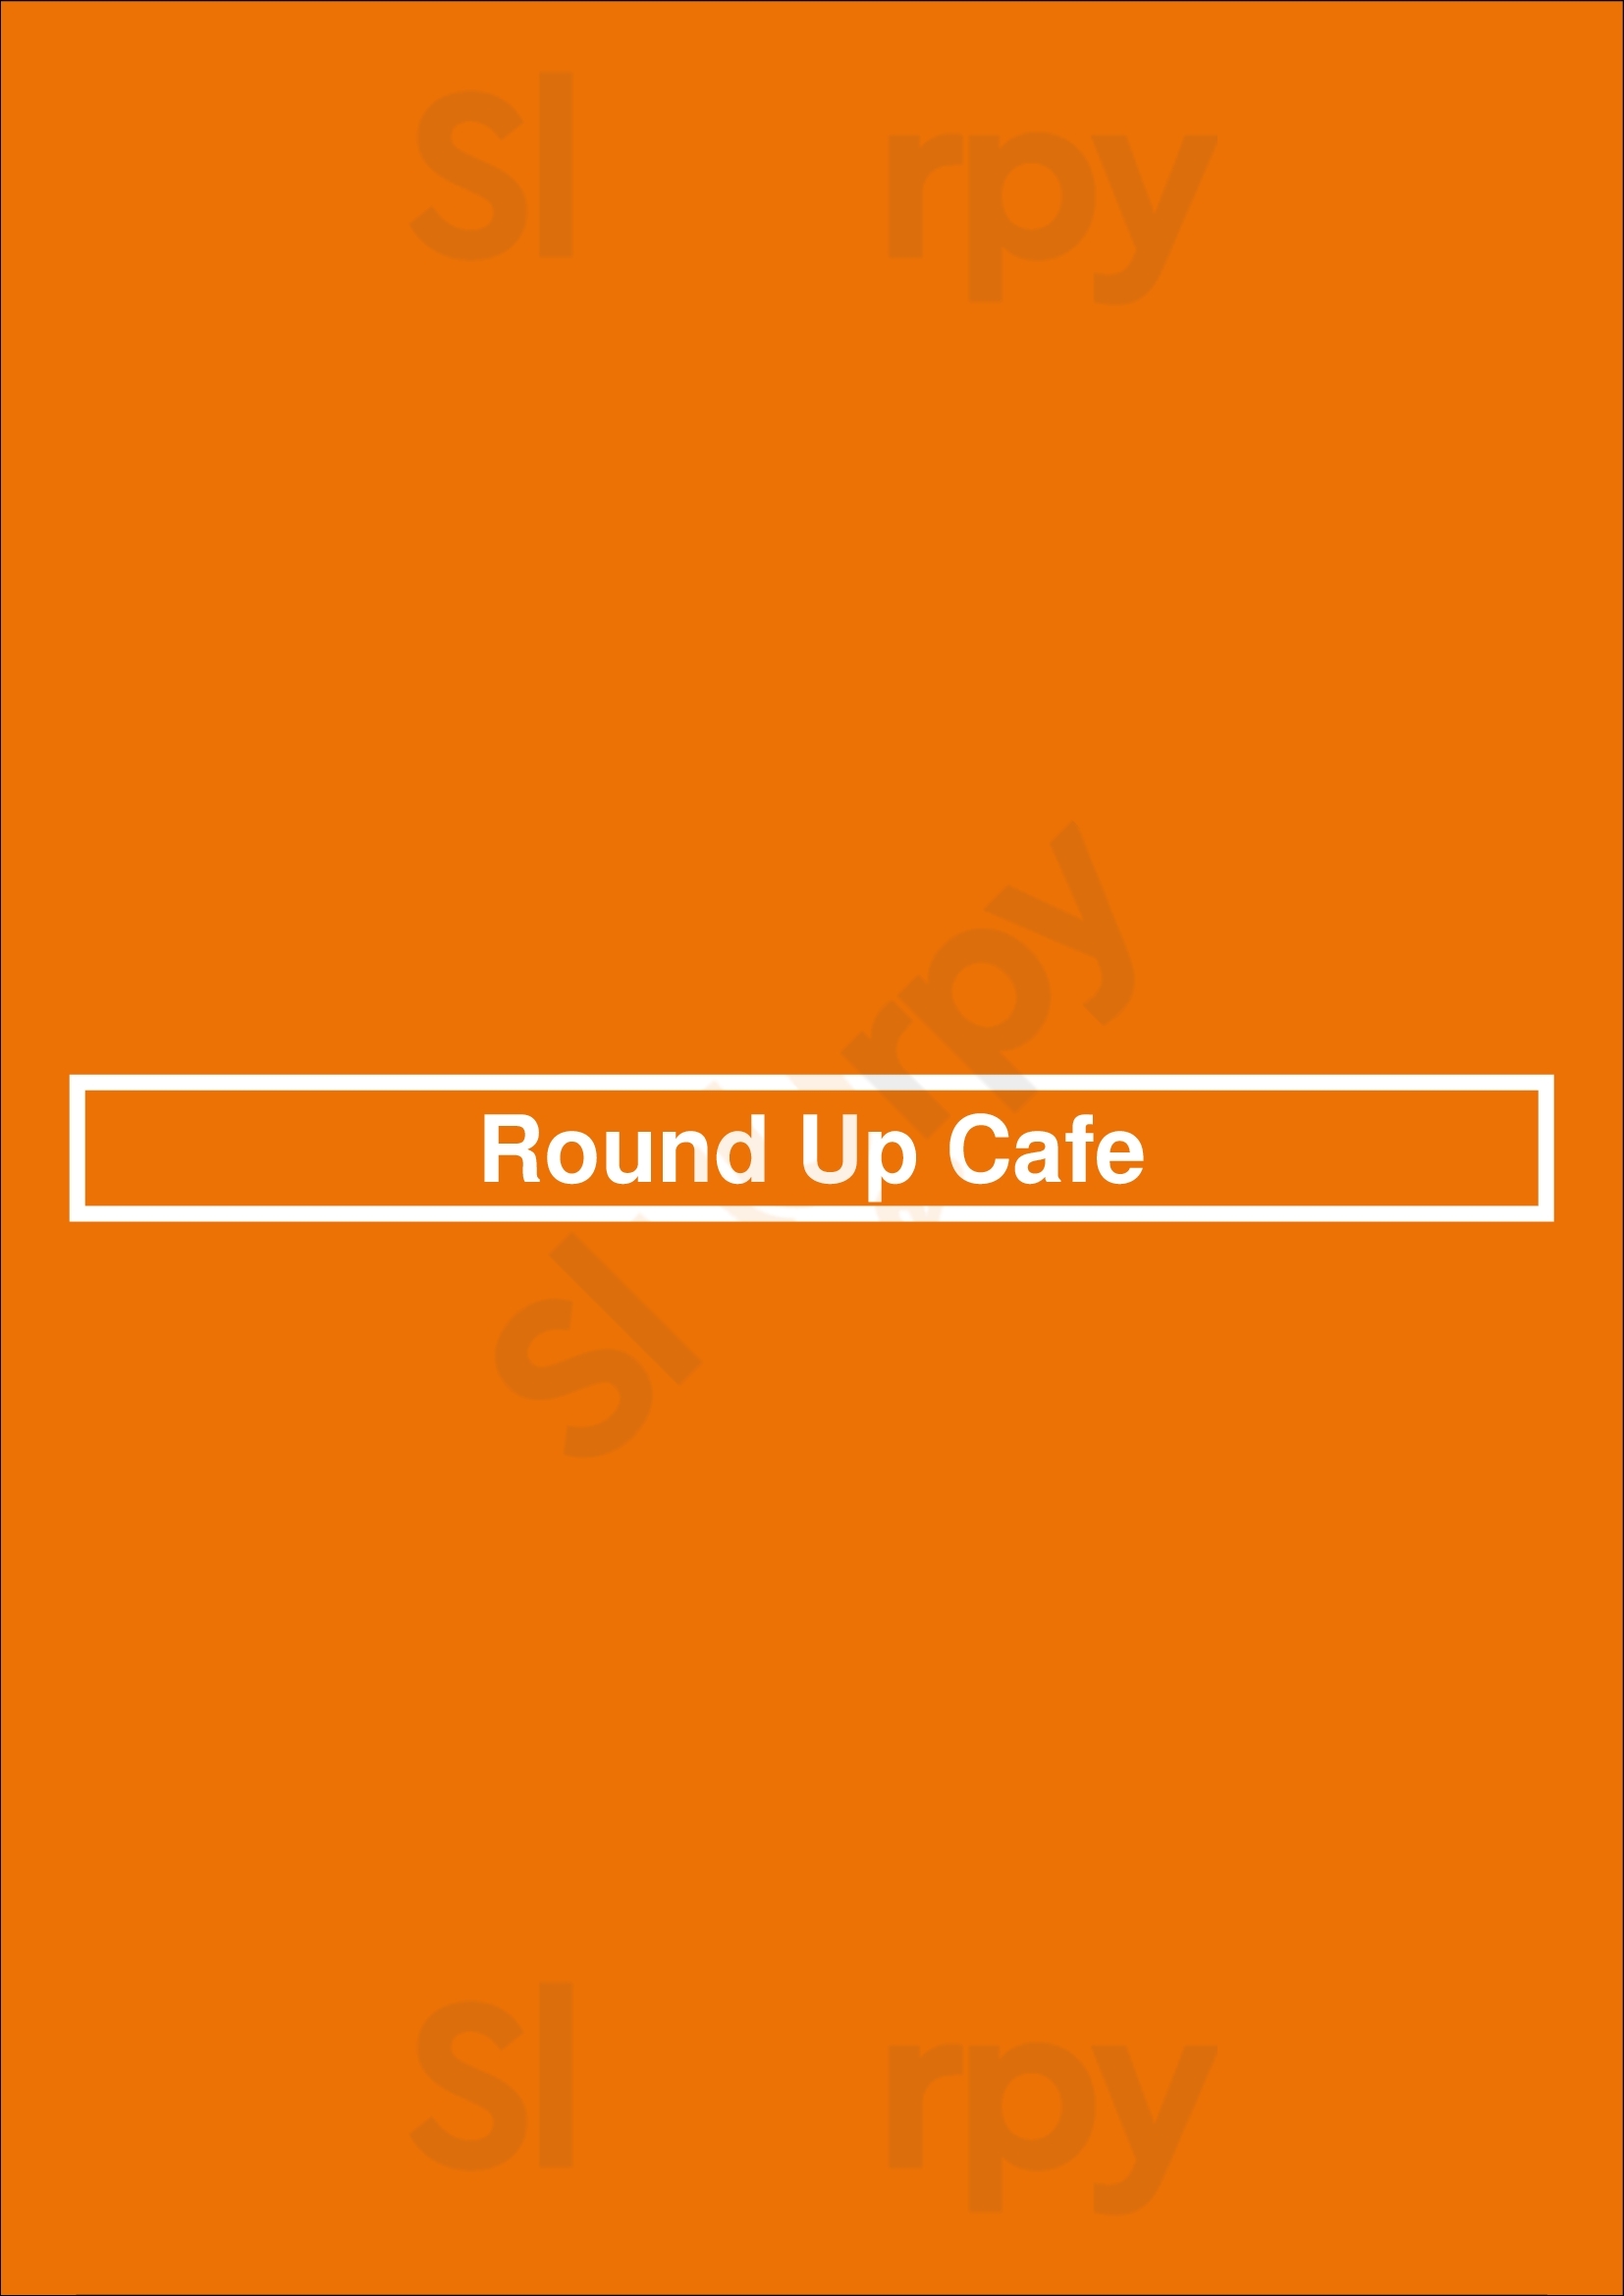 Round Up Cafe Surrey Menu - 1